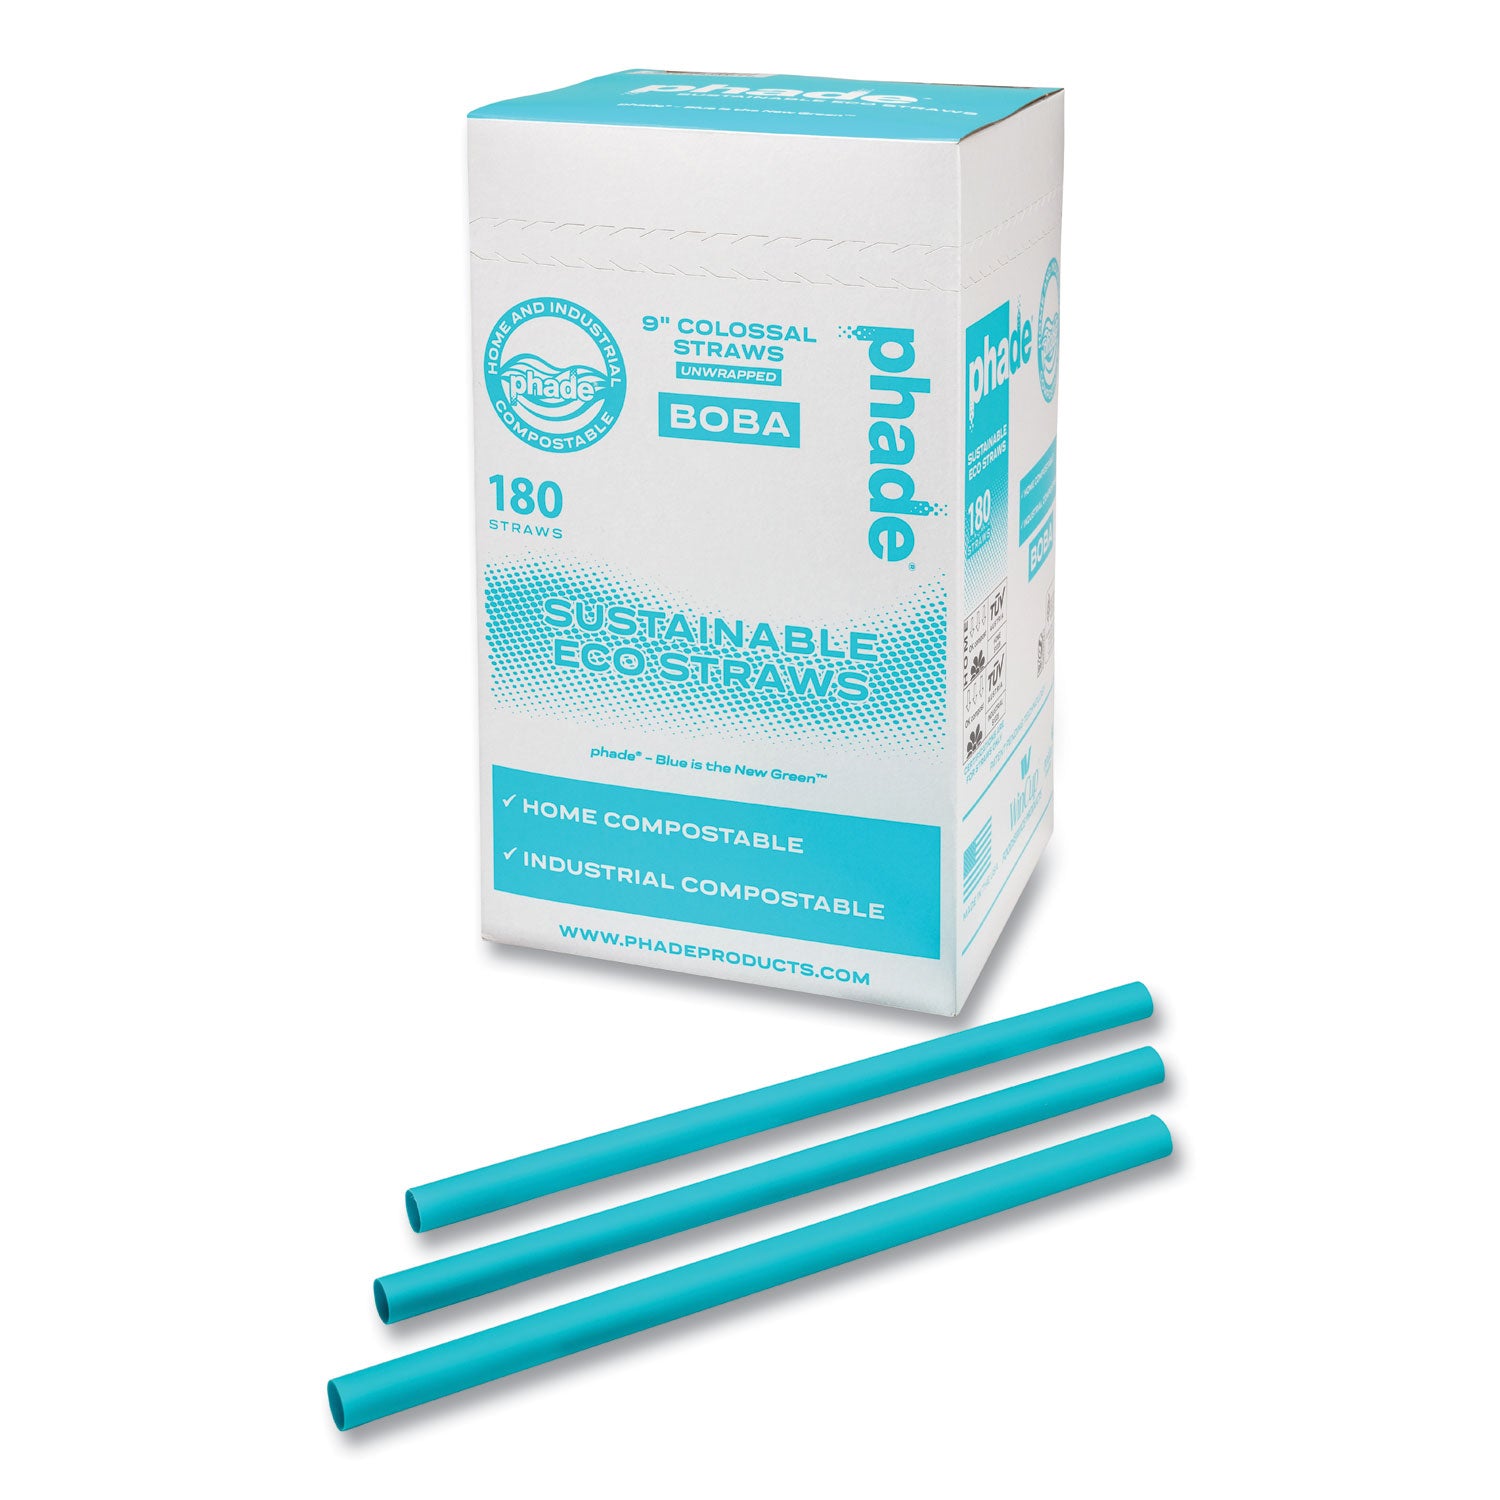 marine-biodegradable-straws-boba-straws-9-ocean-blue-720-carton_car511207 - 1